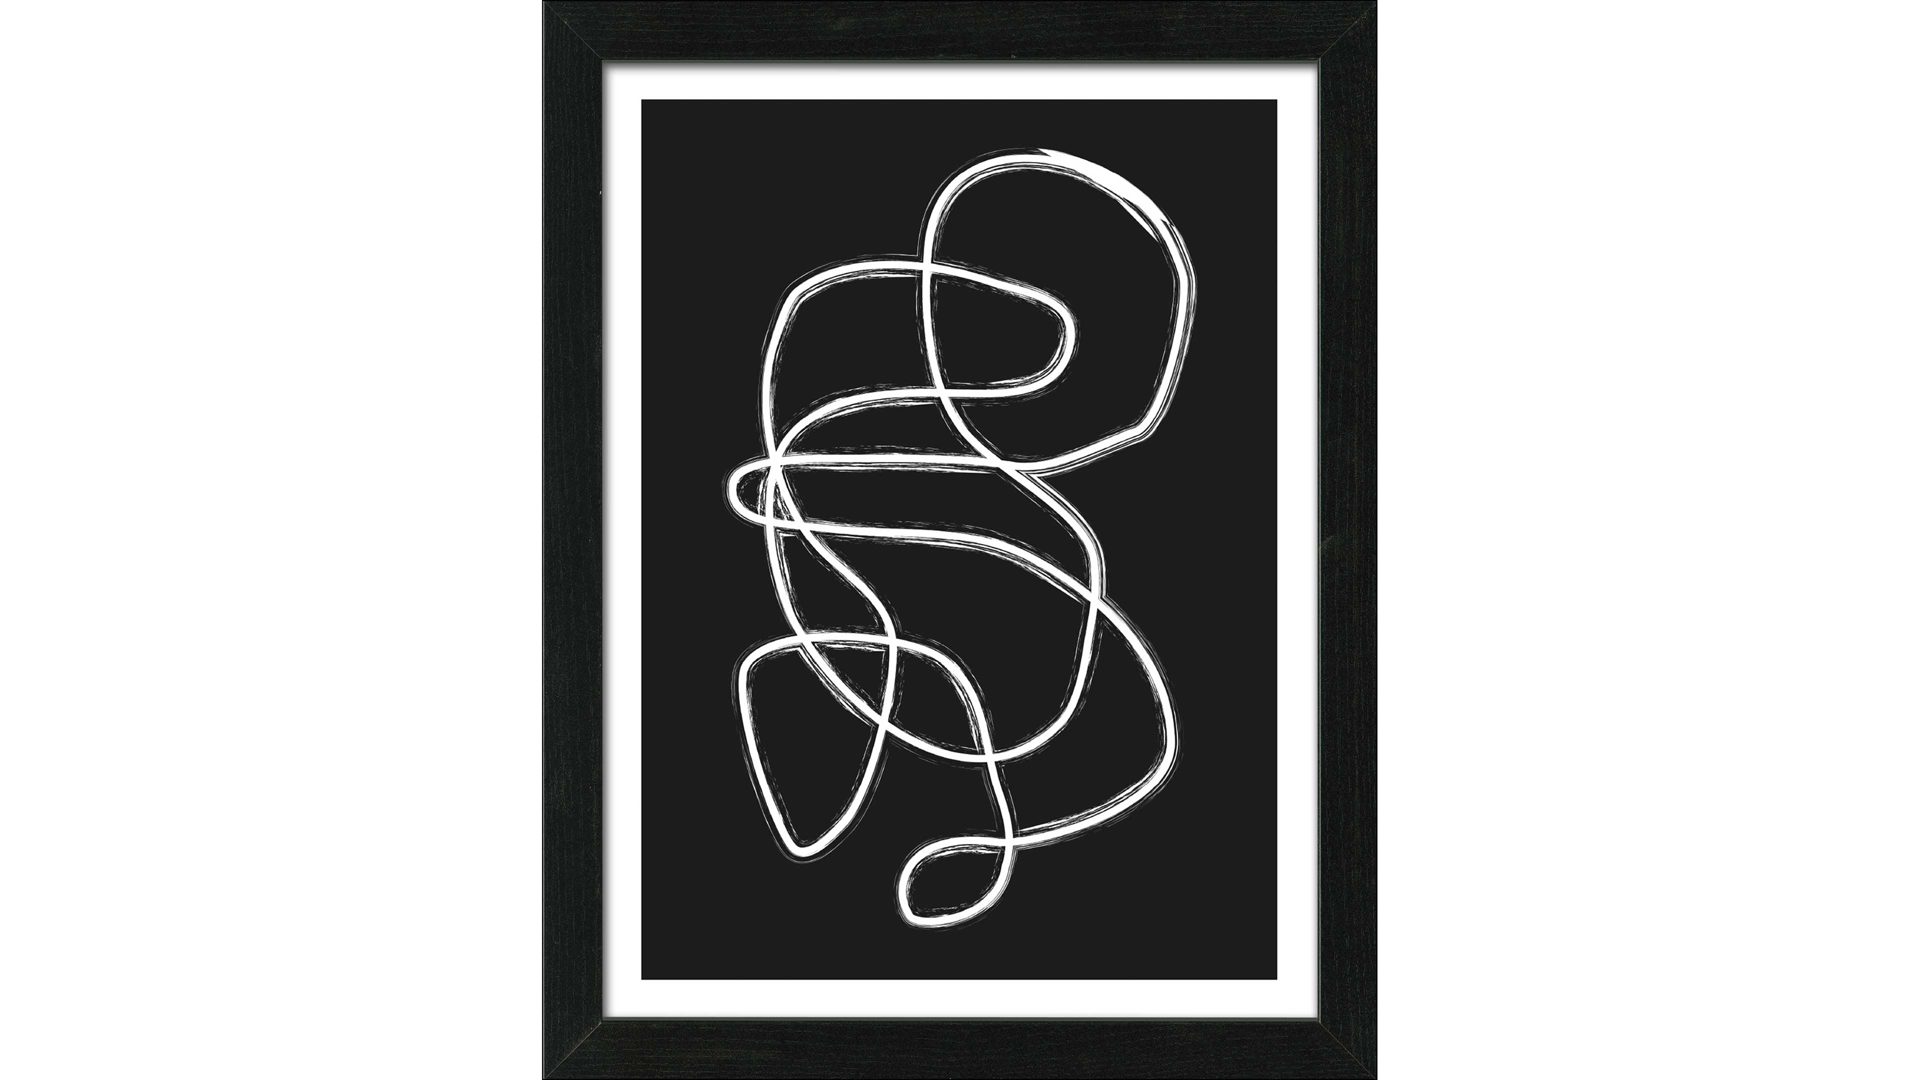 Kunstdruck Interliving BEST BUDDYS! aus Karton / Papier / Pappe in Weiß PRO®ART Kunstdruck Scandic Living Lines and shapes I - ca. 35 x 45 cm